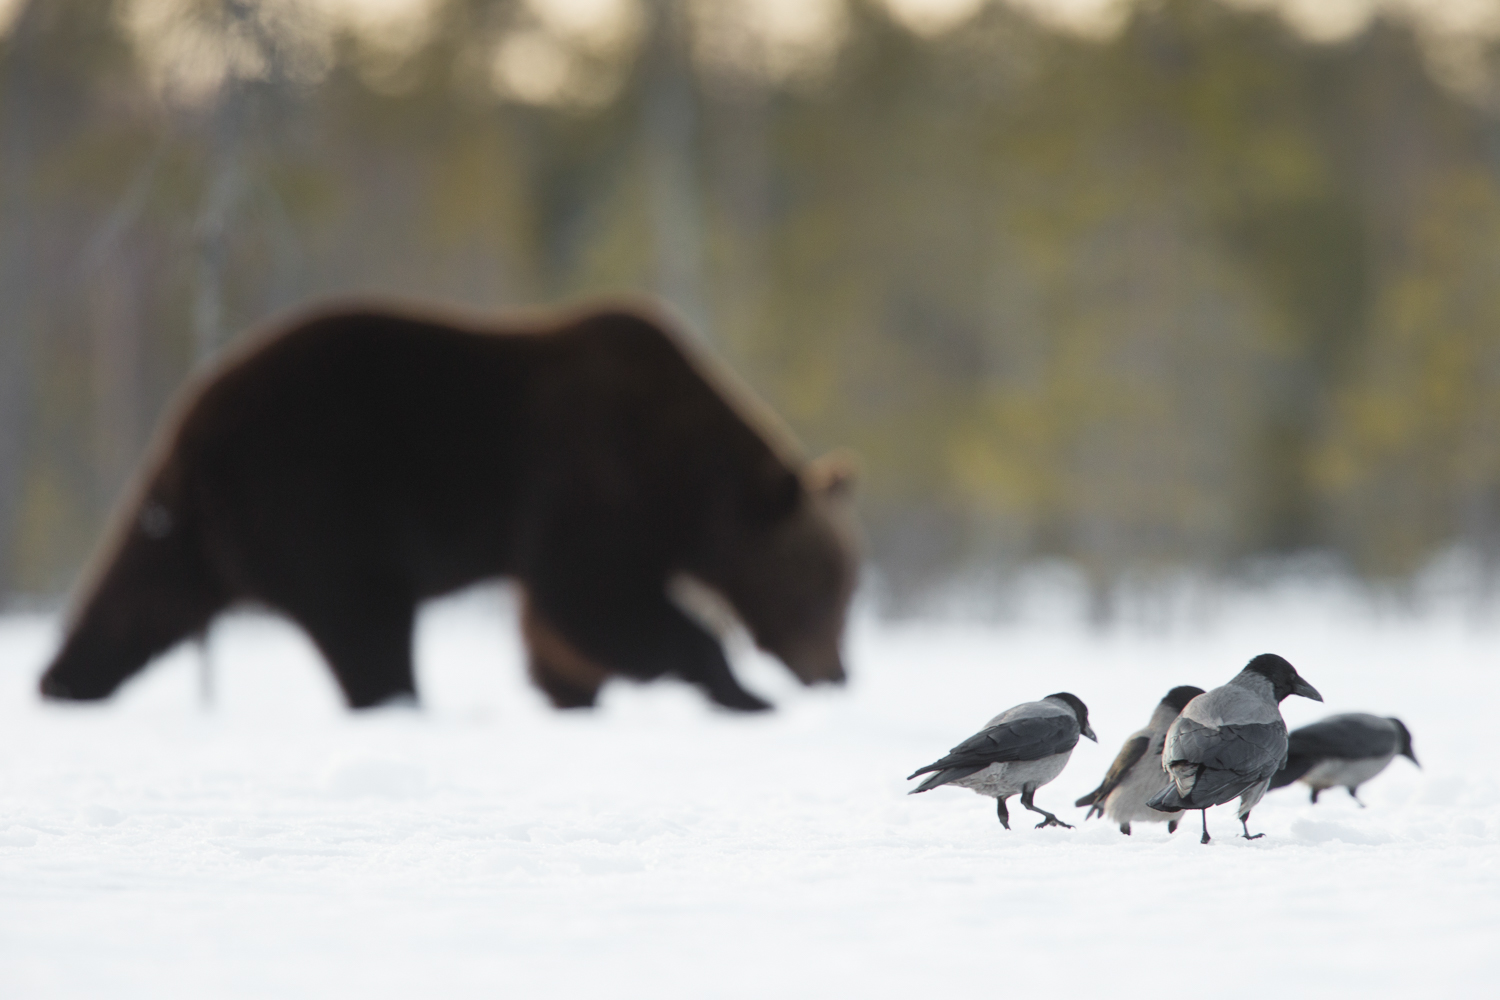 Brown bear photography tour Finland-7.jpg